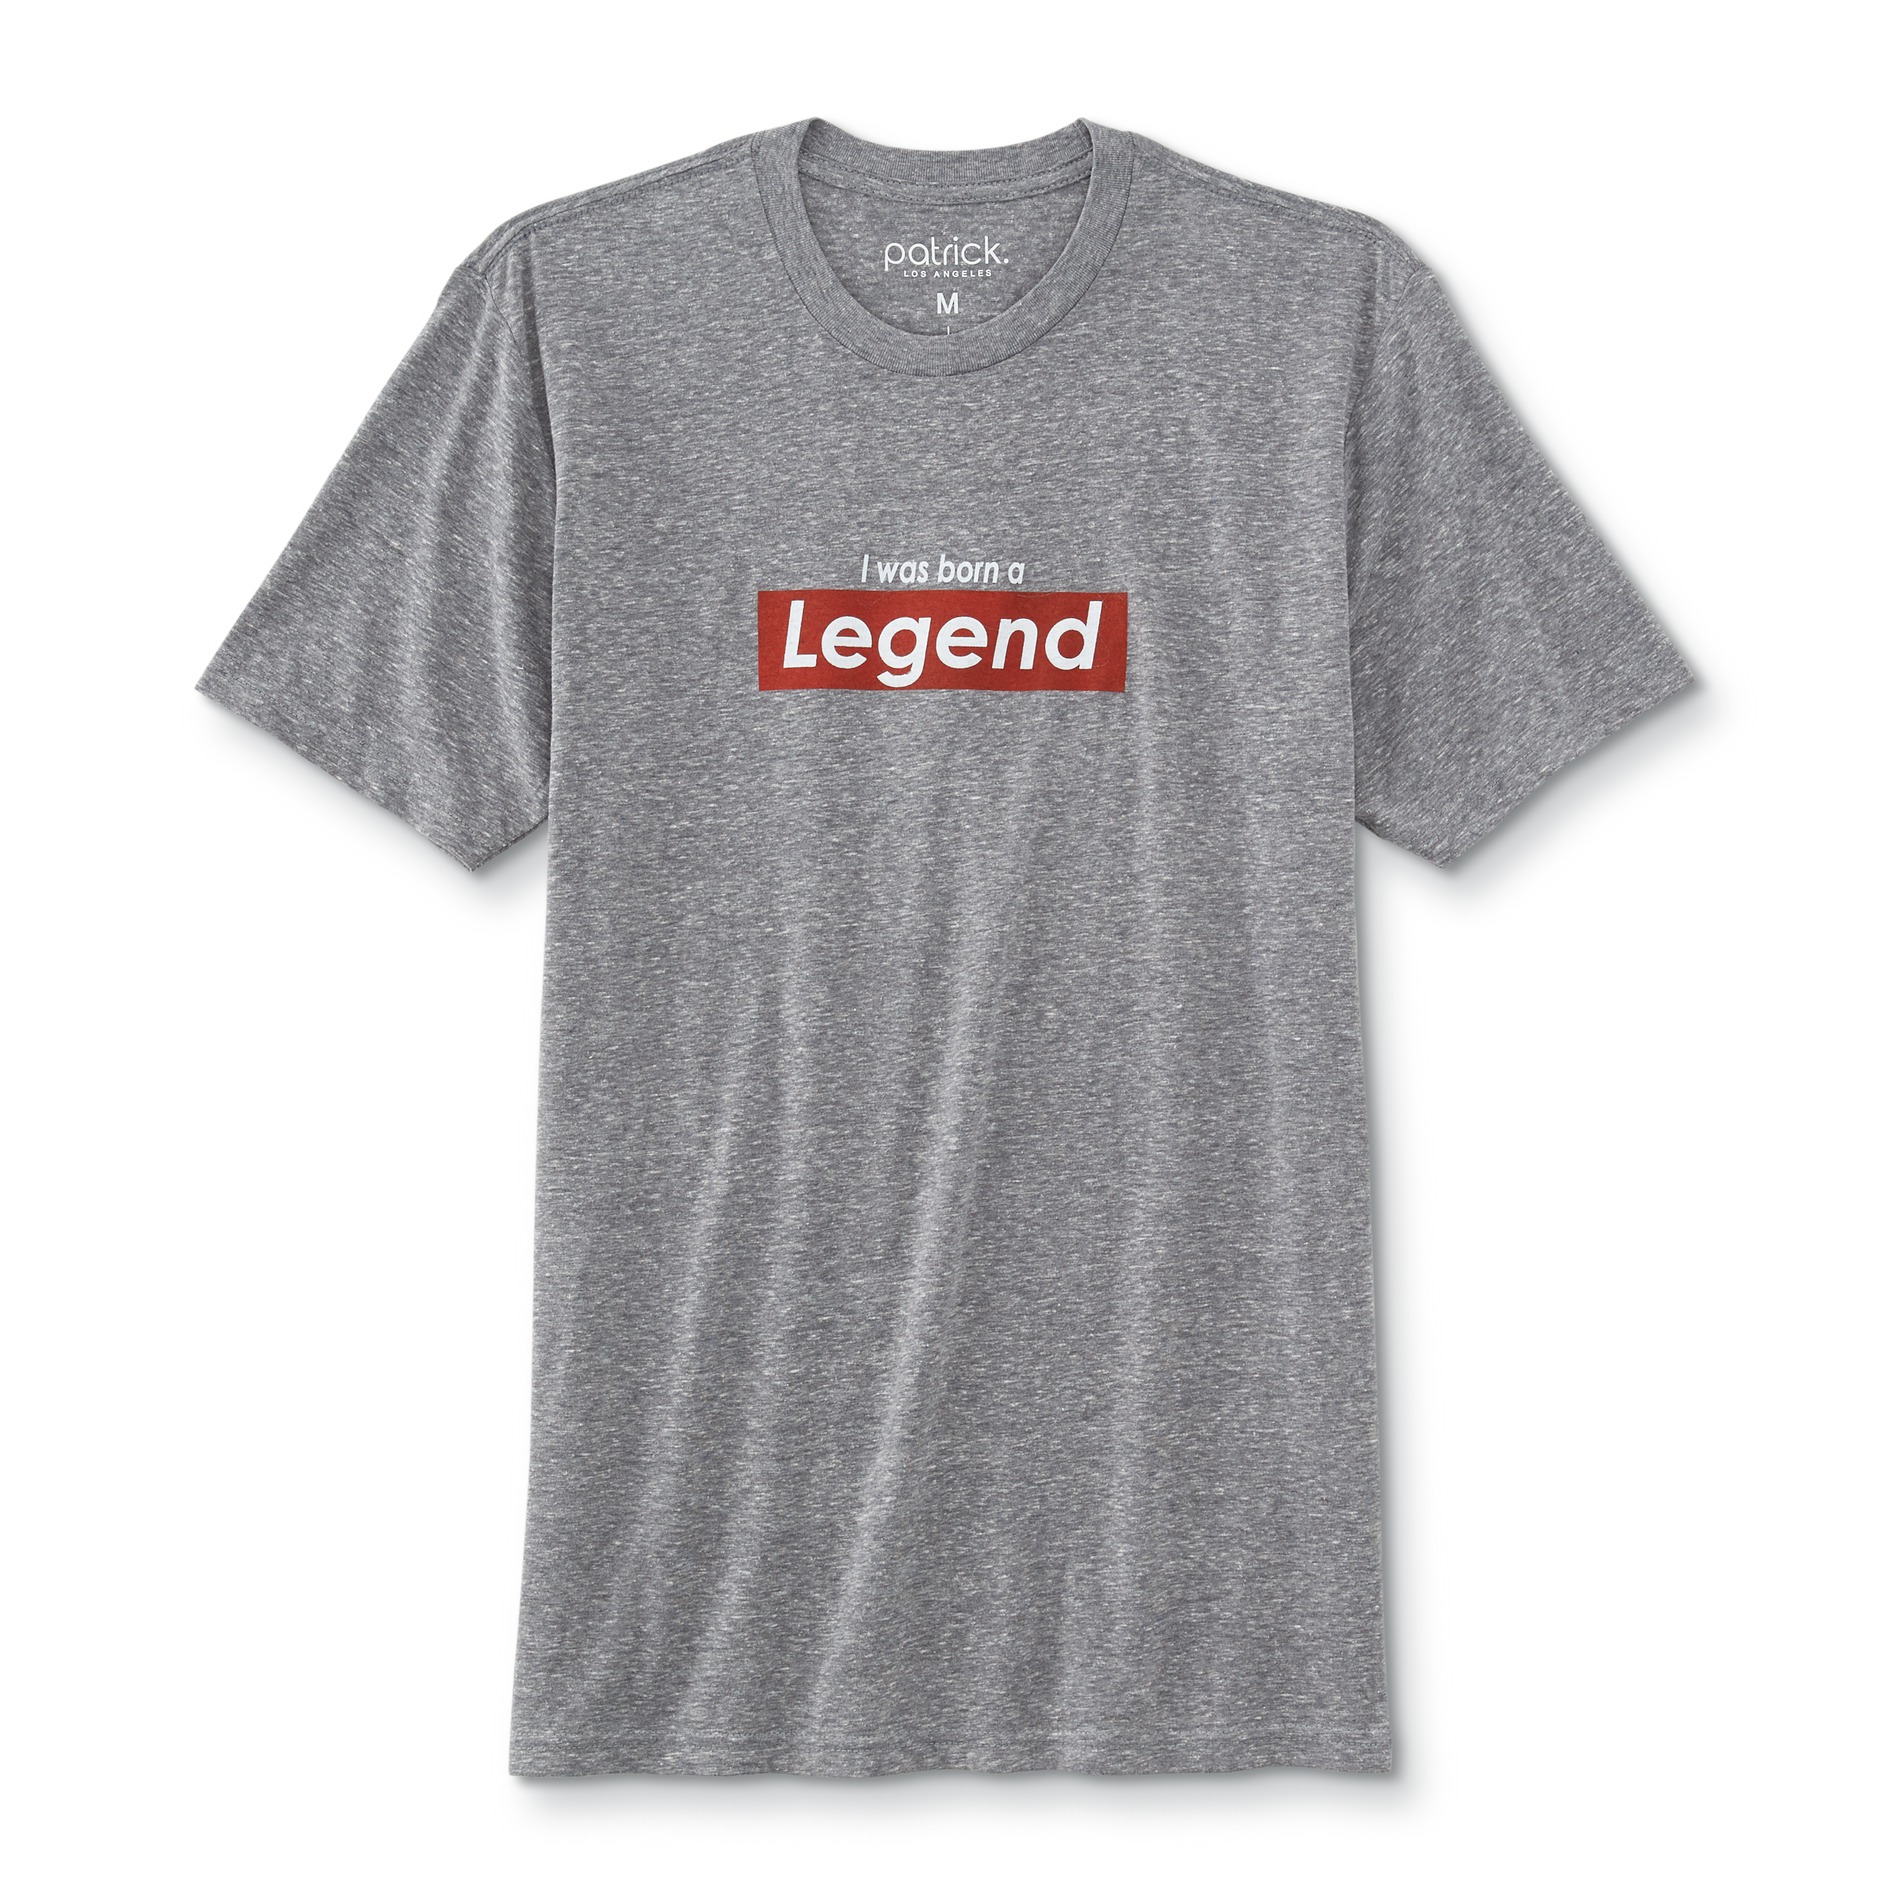 Screen Tee Market Brands Graphic T-Shirt - I Was Born a Legend